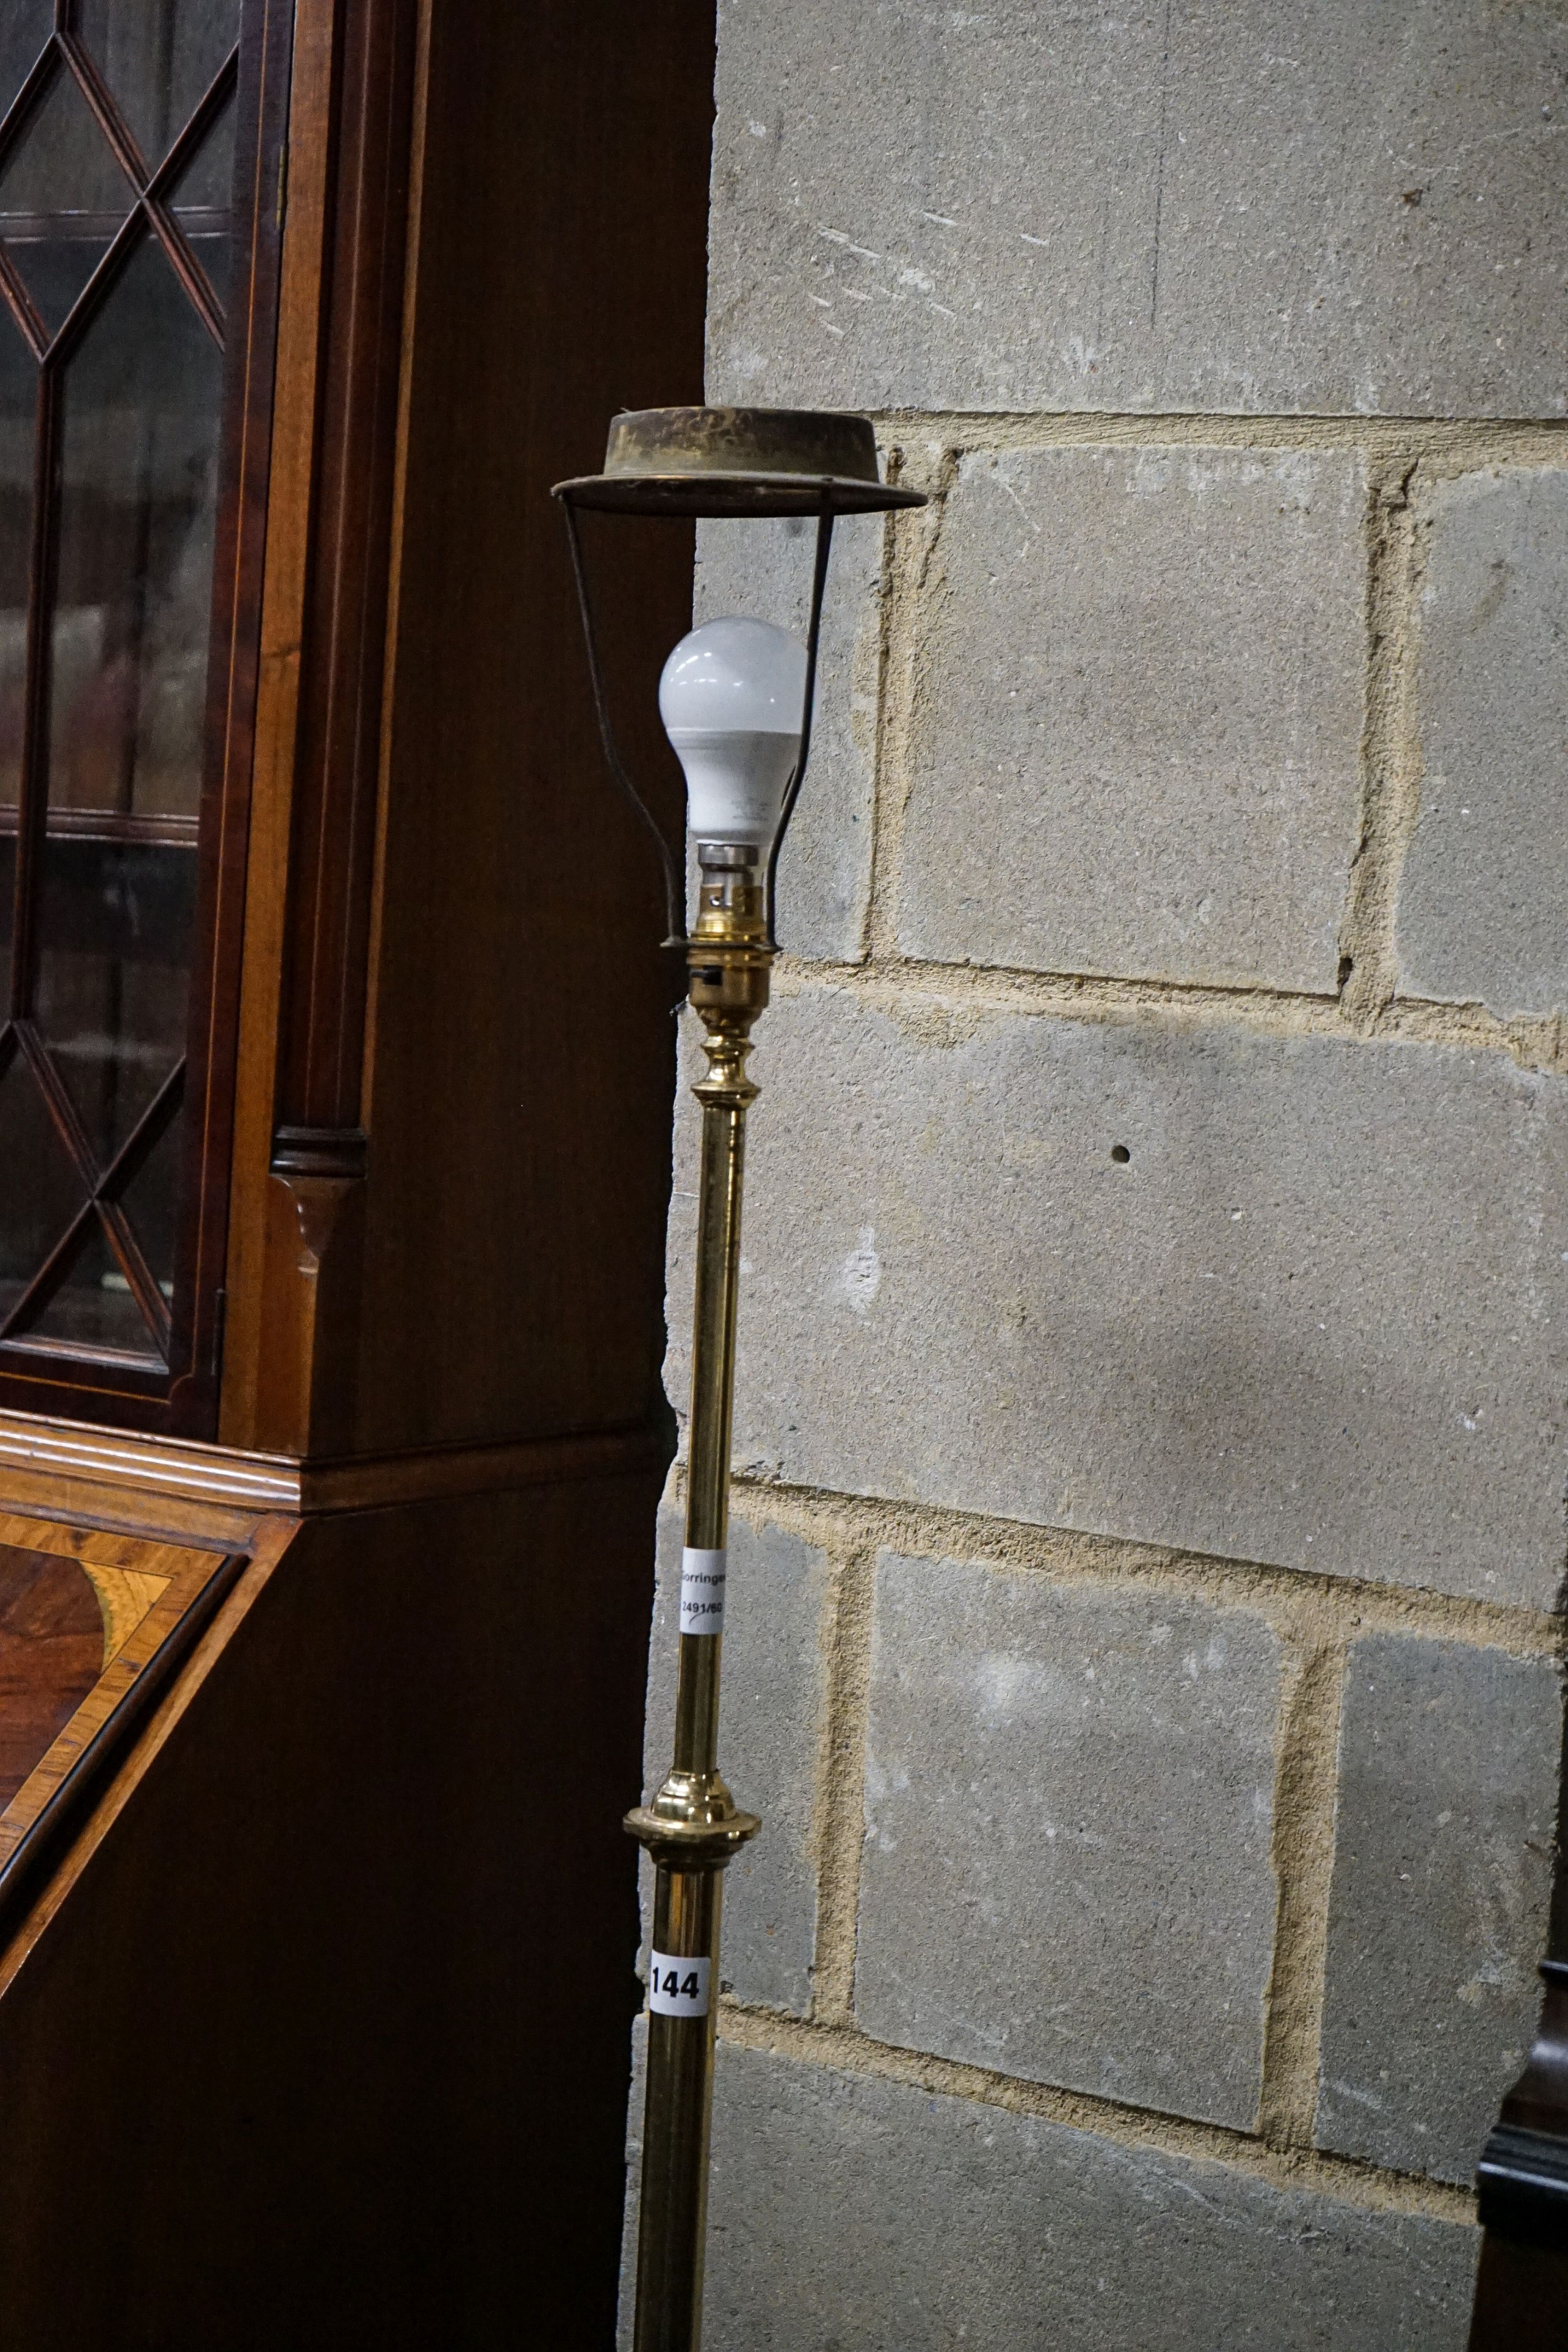 An Edwardian brass telescopic lamp standard, with Benson style foliate base, height 140cm